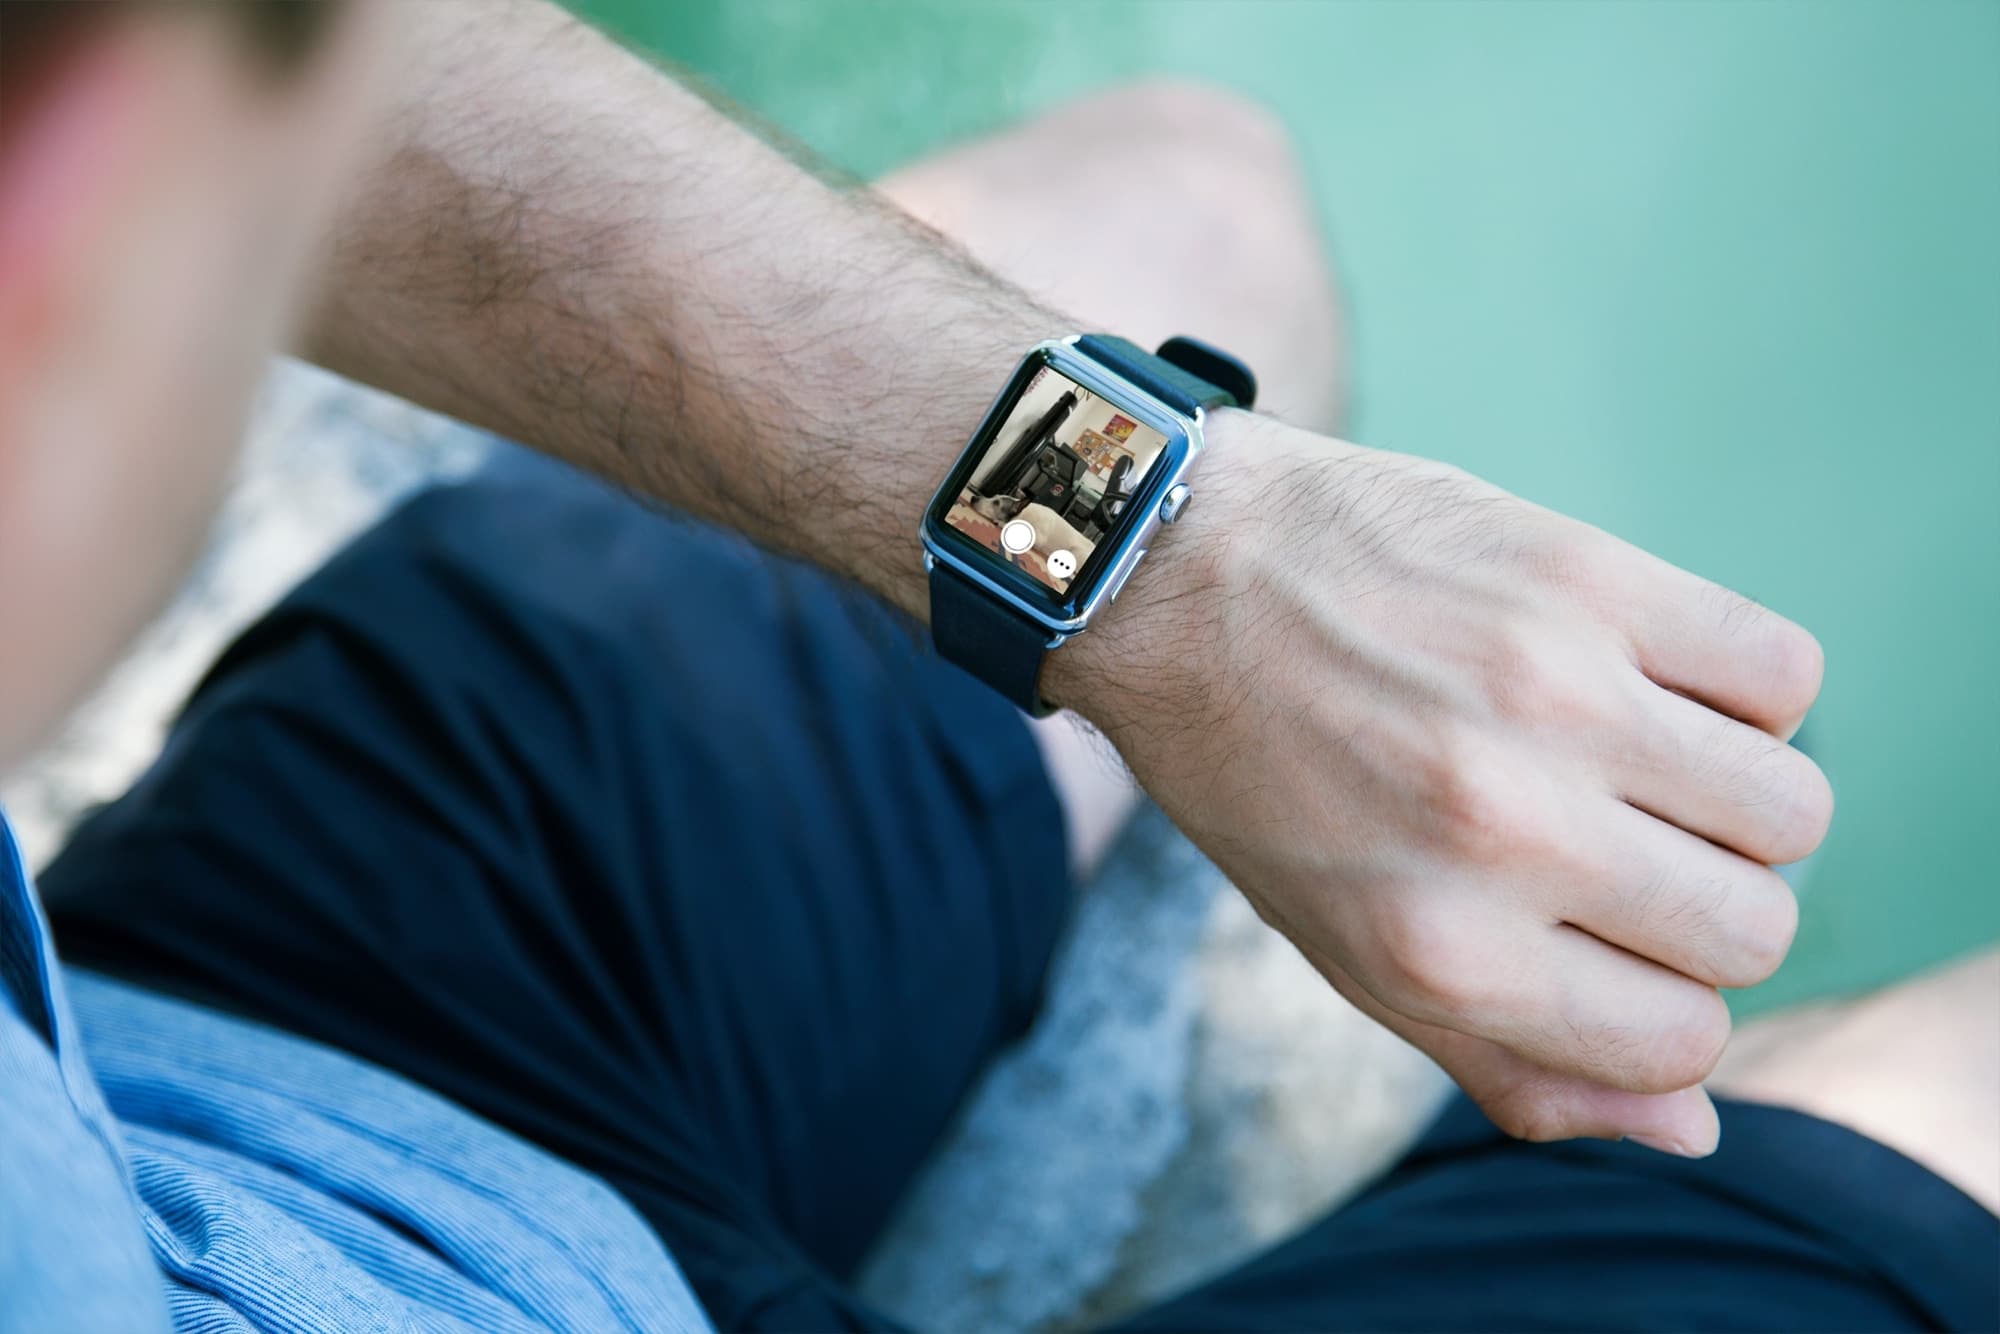 Camera Remote app on Apple Watch